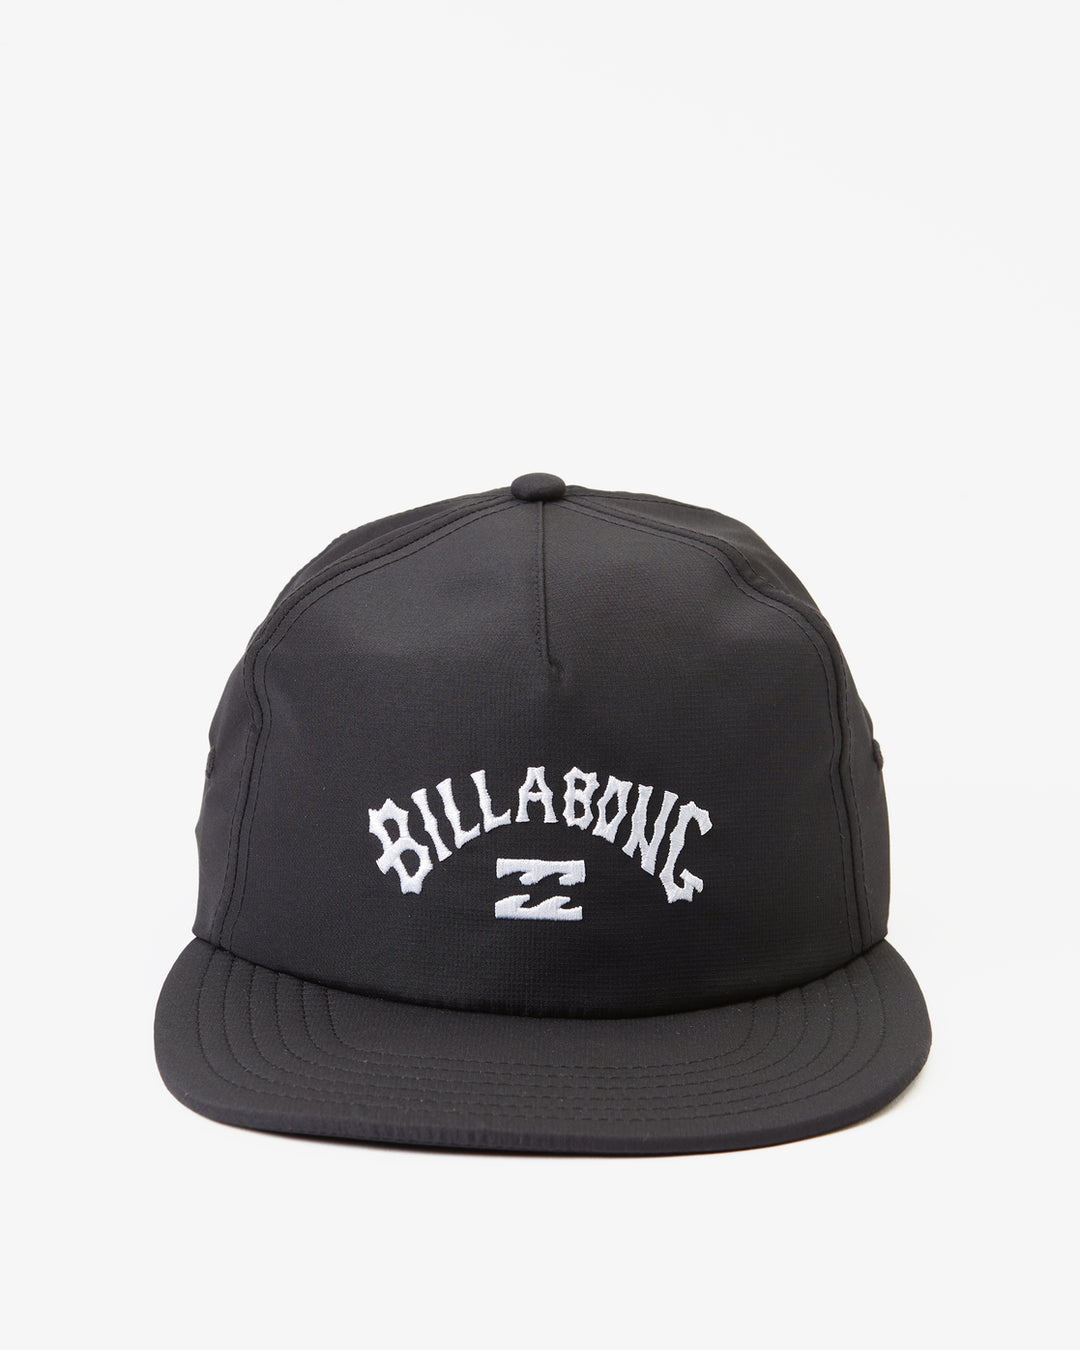 Billabong Arch Team Strapback Hat - Black - Sun Diego Boardshop